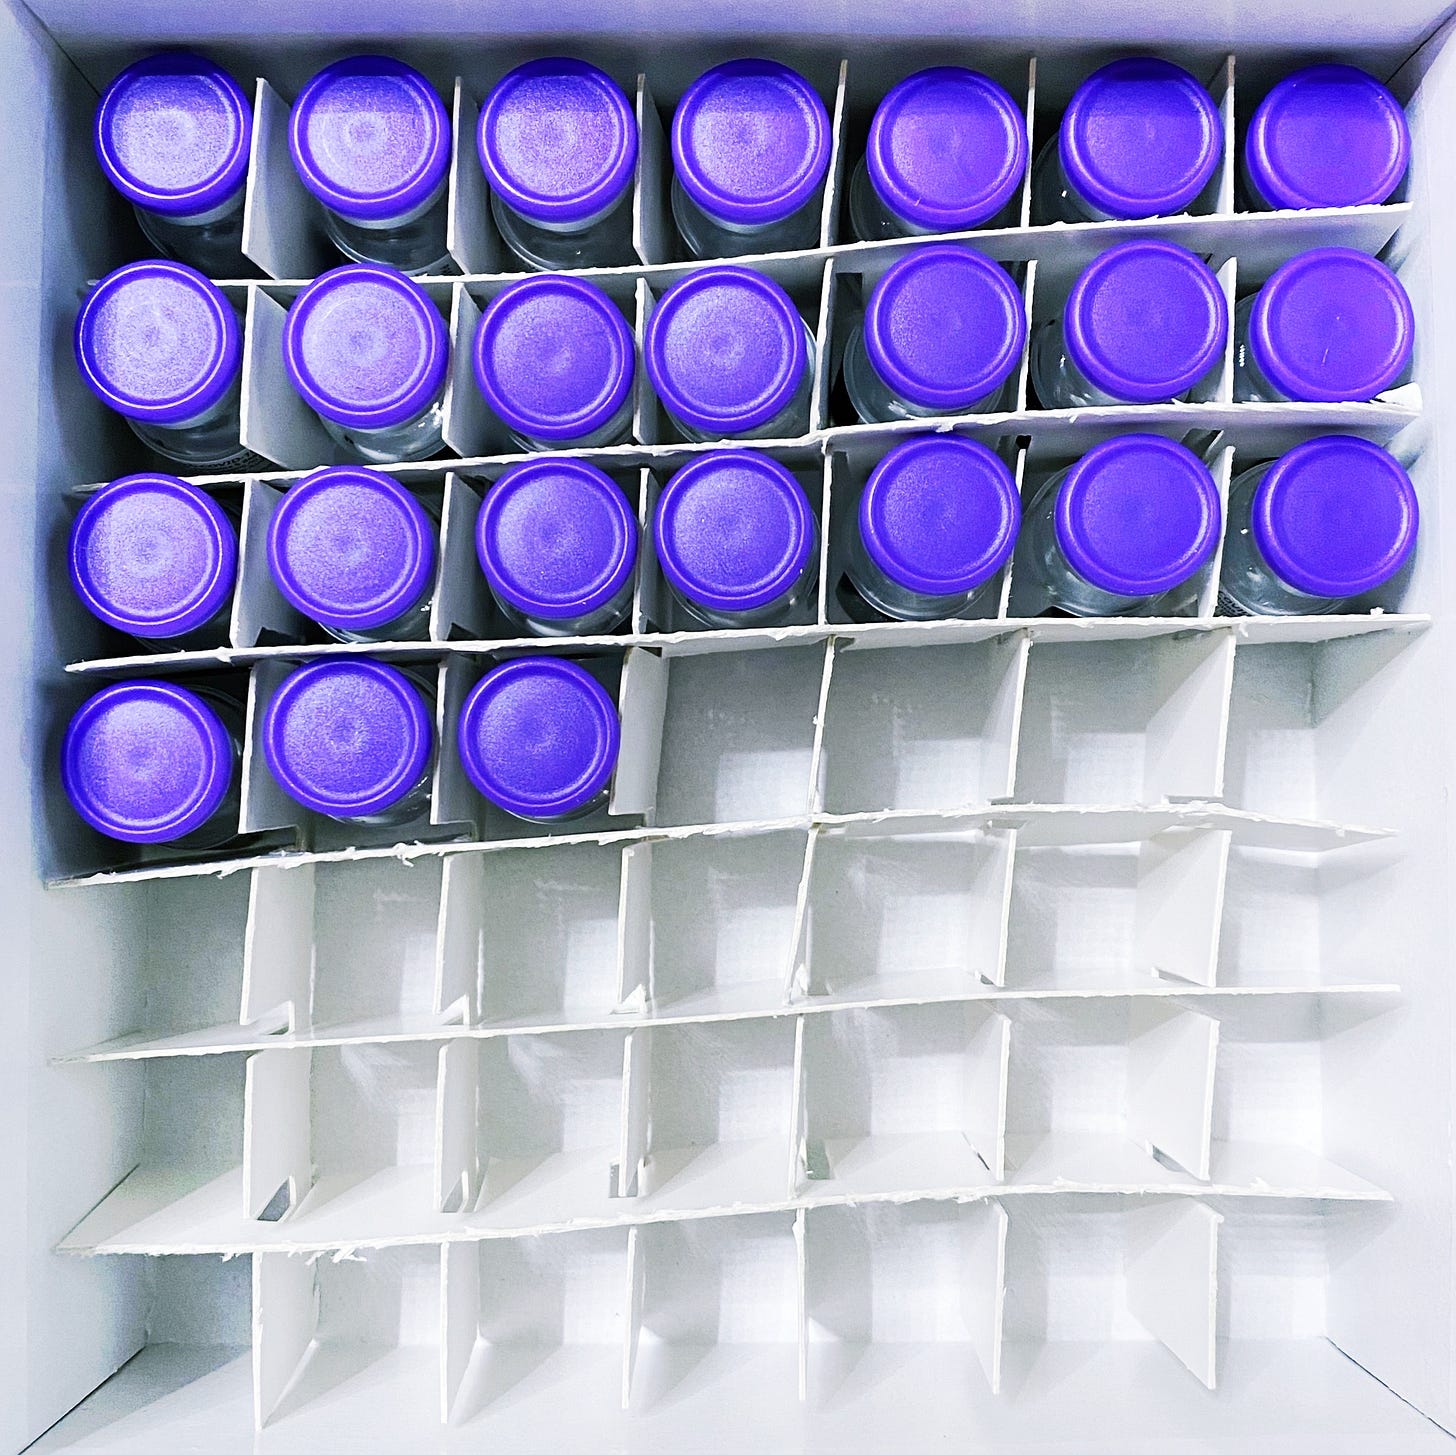 Picture of vials of Pfizer Covid Vaccine